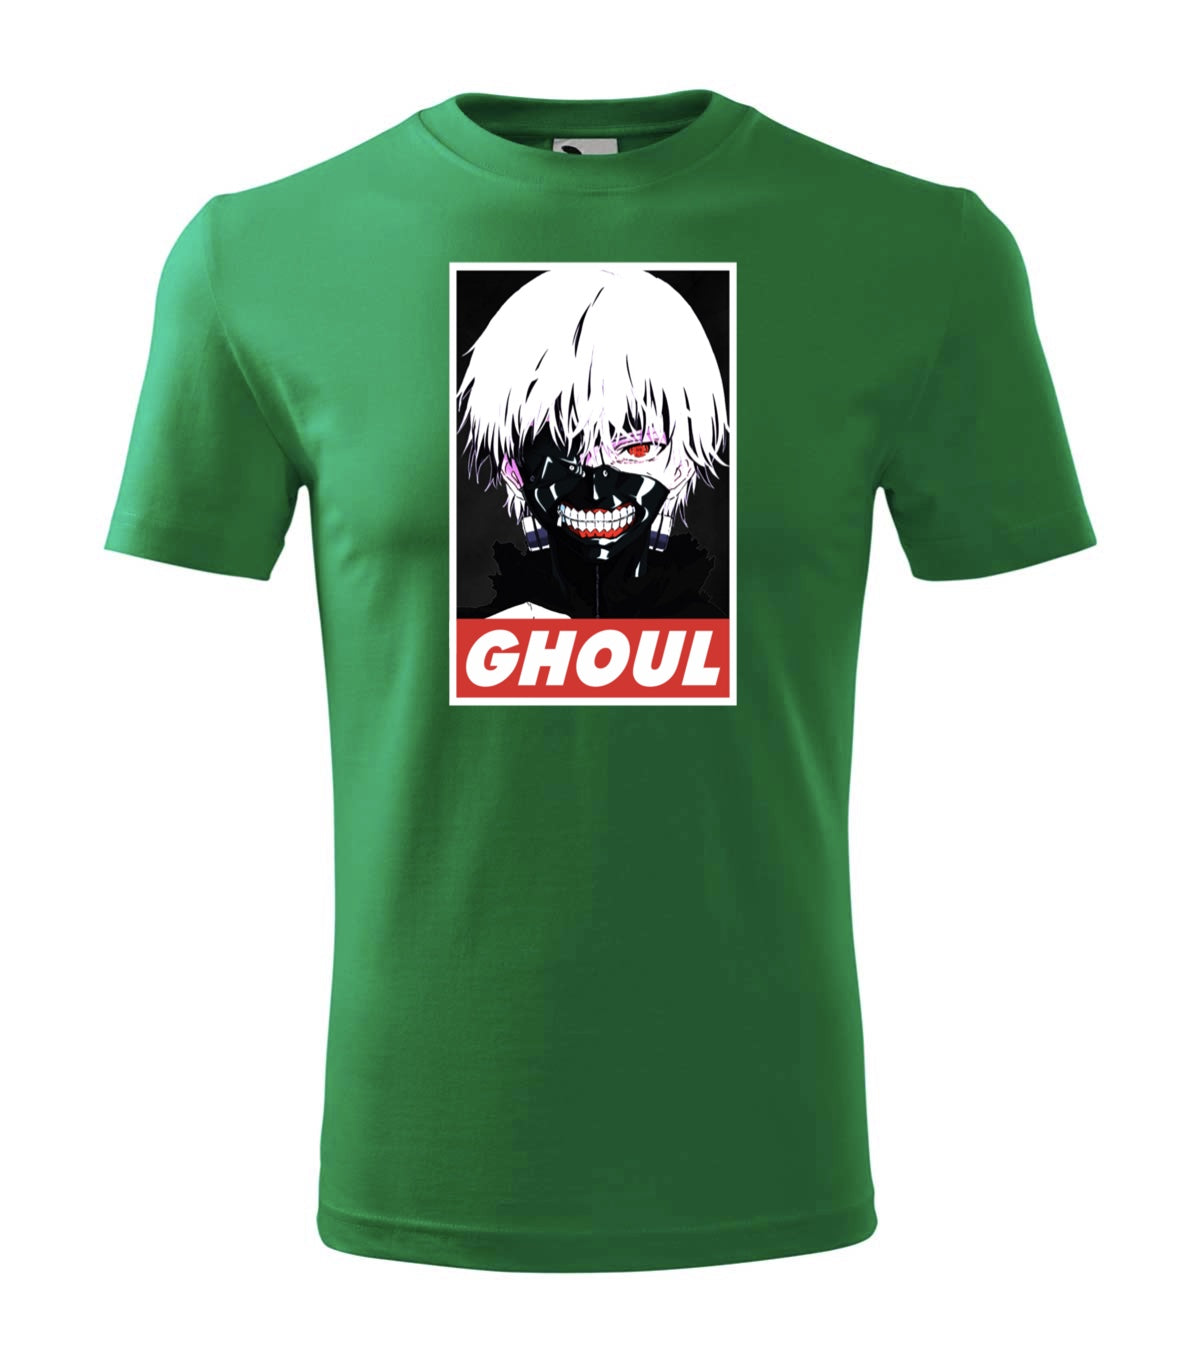 Ghoul gyerek technikai póló